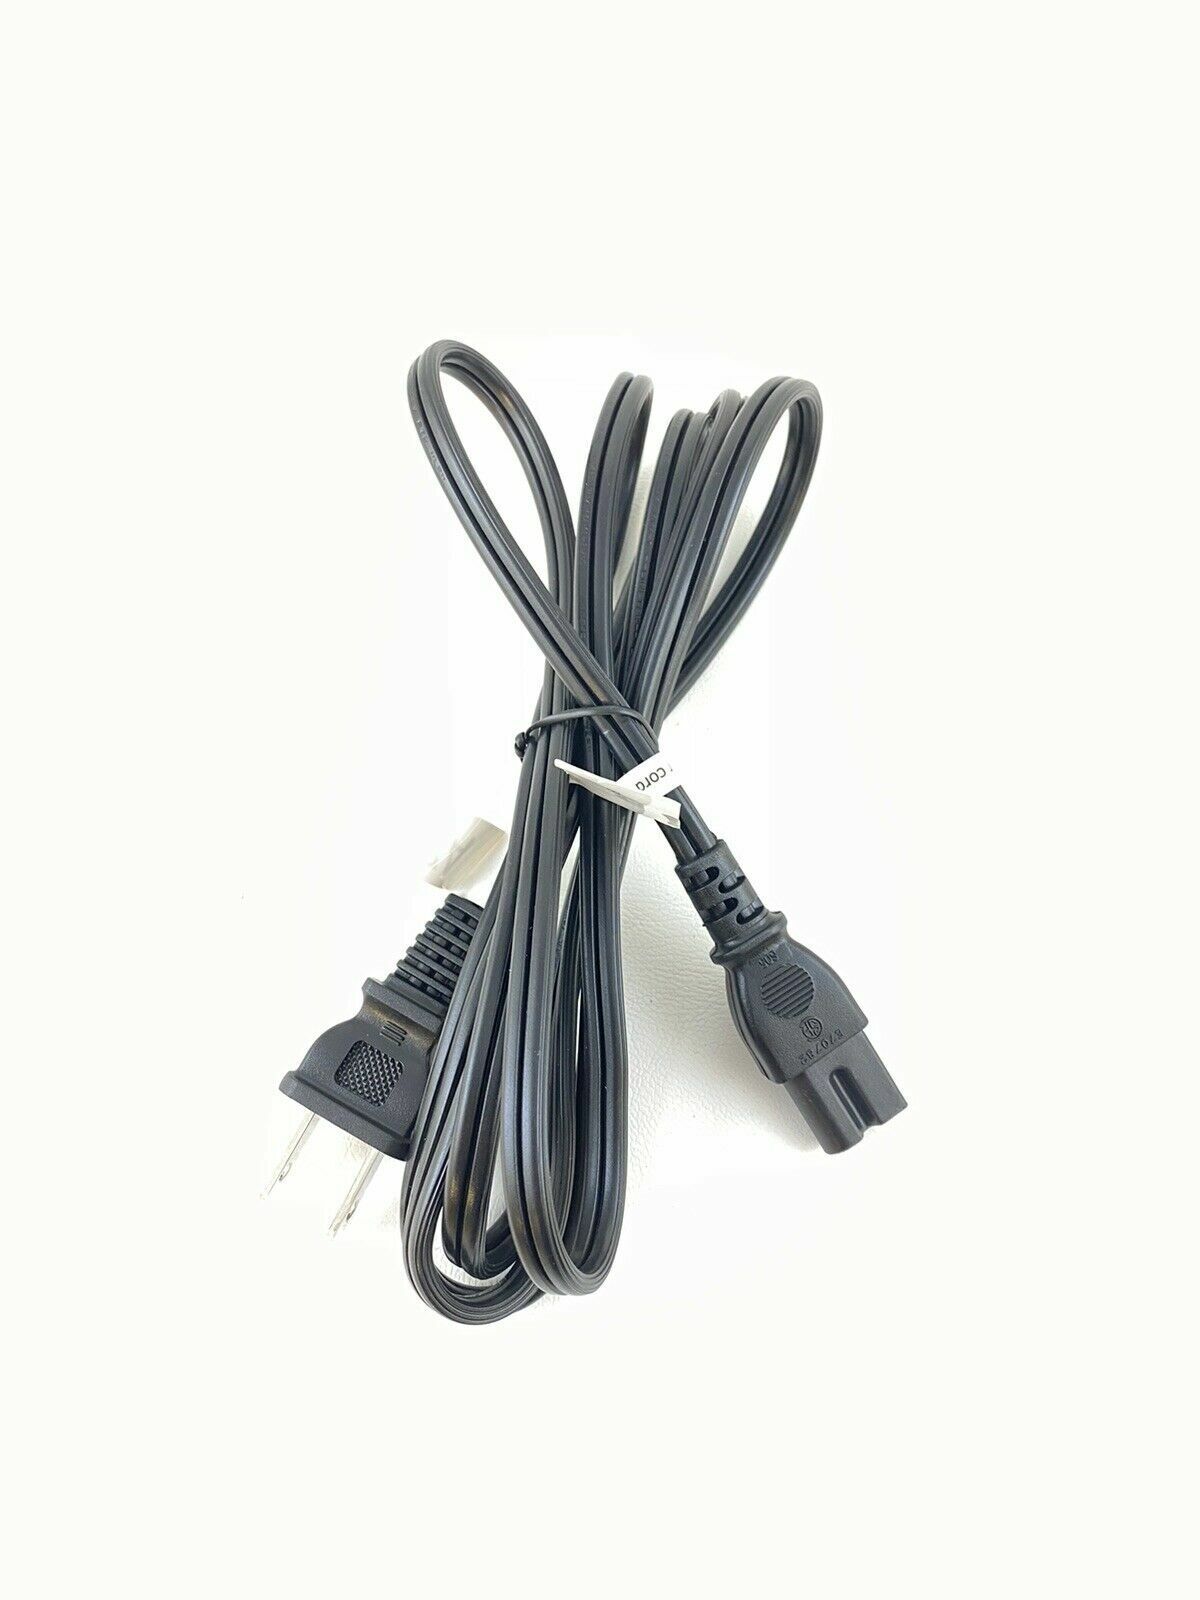 Linetek SMC Xfinity Black Power Cable SIS 3.0 Router Modem Cord smcd3gnv 125V 7A